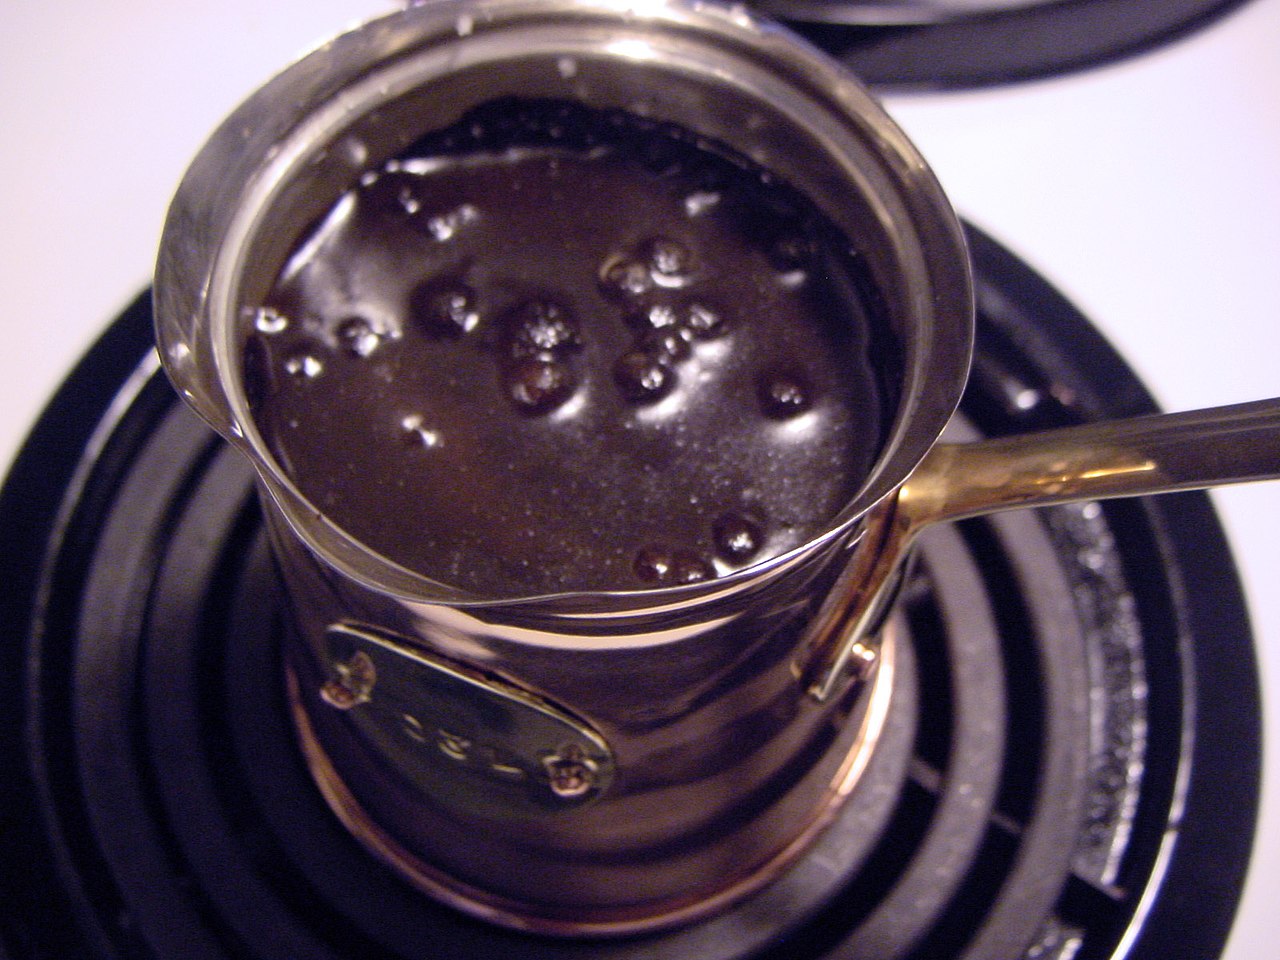 Turkish_coffee_starting_to_boil